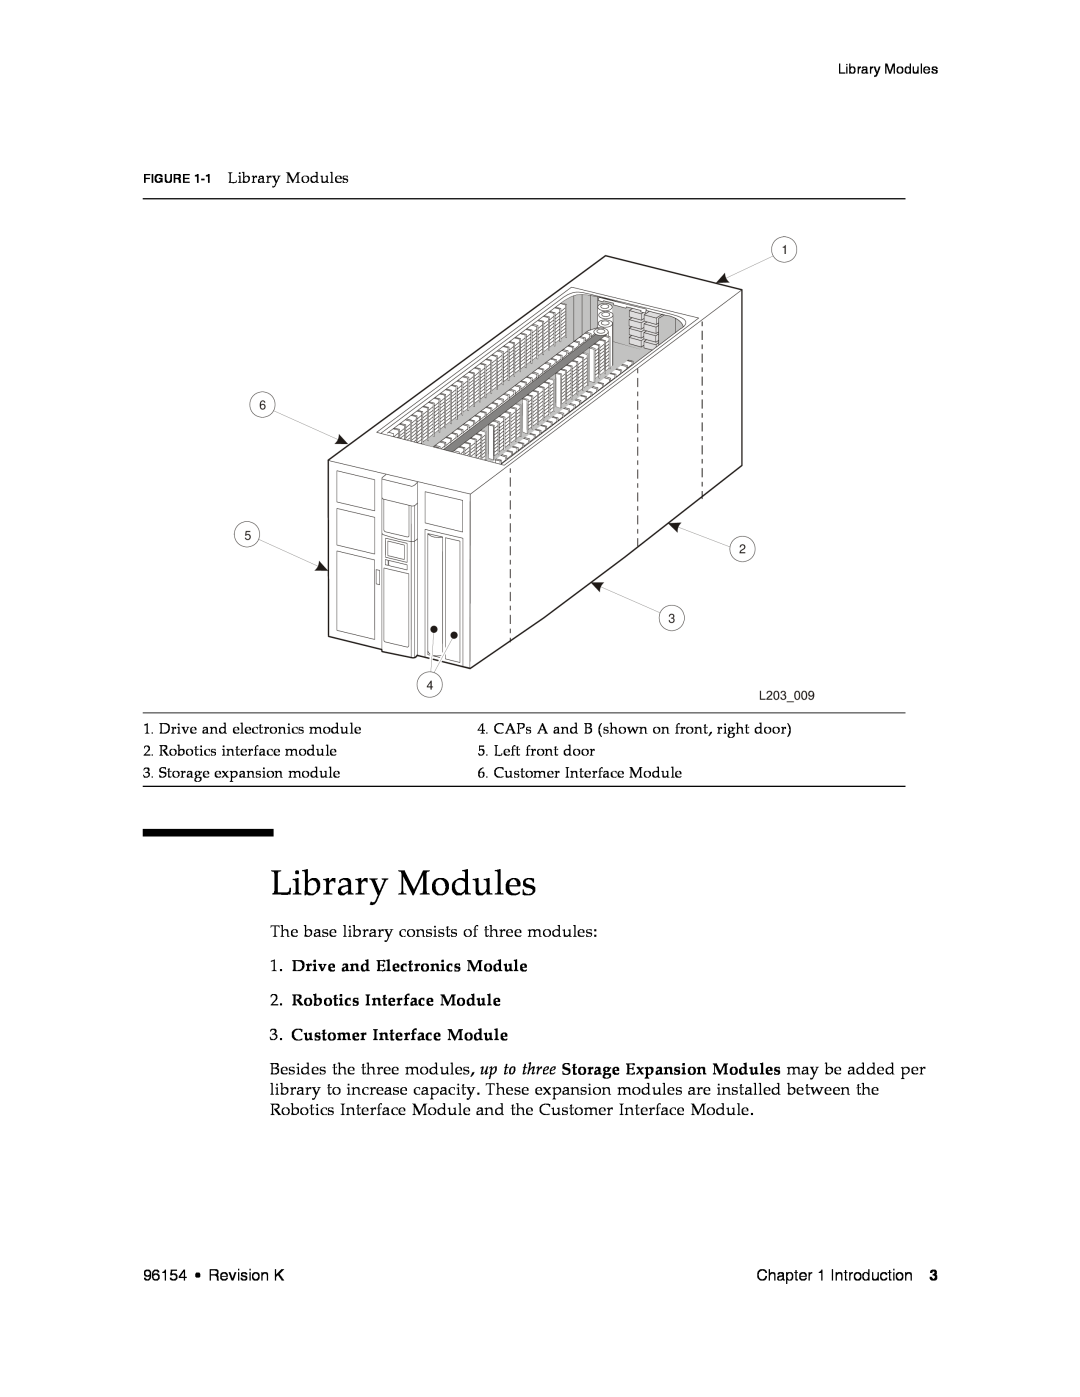 Sun Microsystems SL8500 manual Library Modules, Drive and Electronics Module 2. Robotics Interface Module 